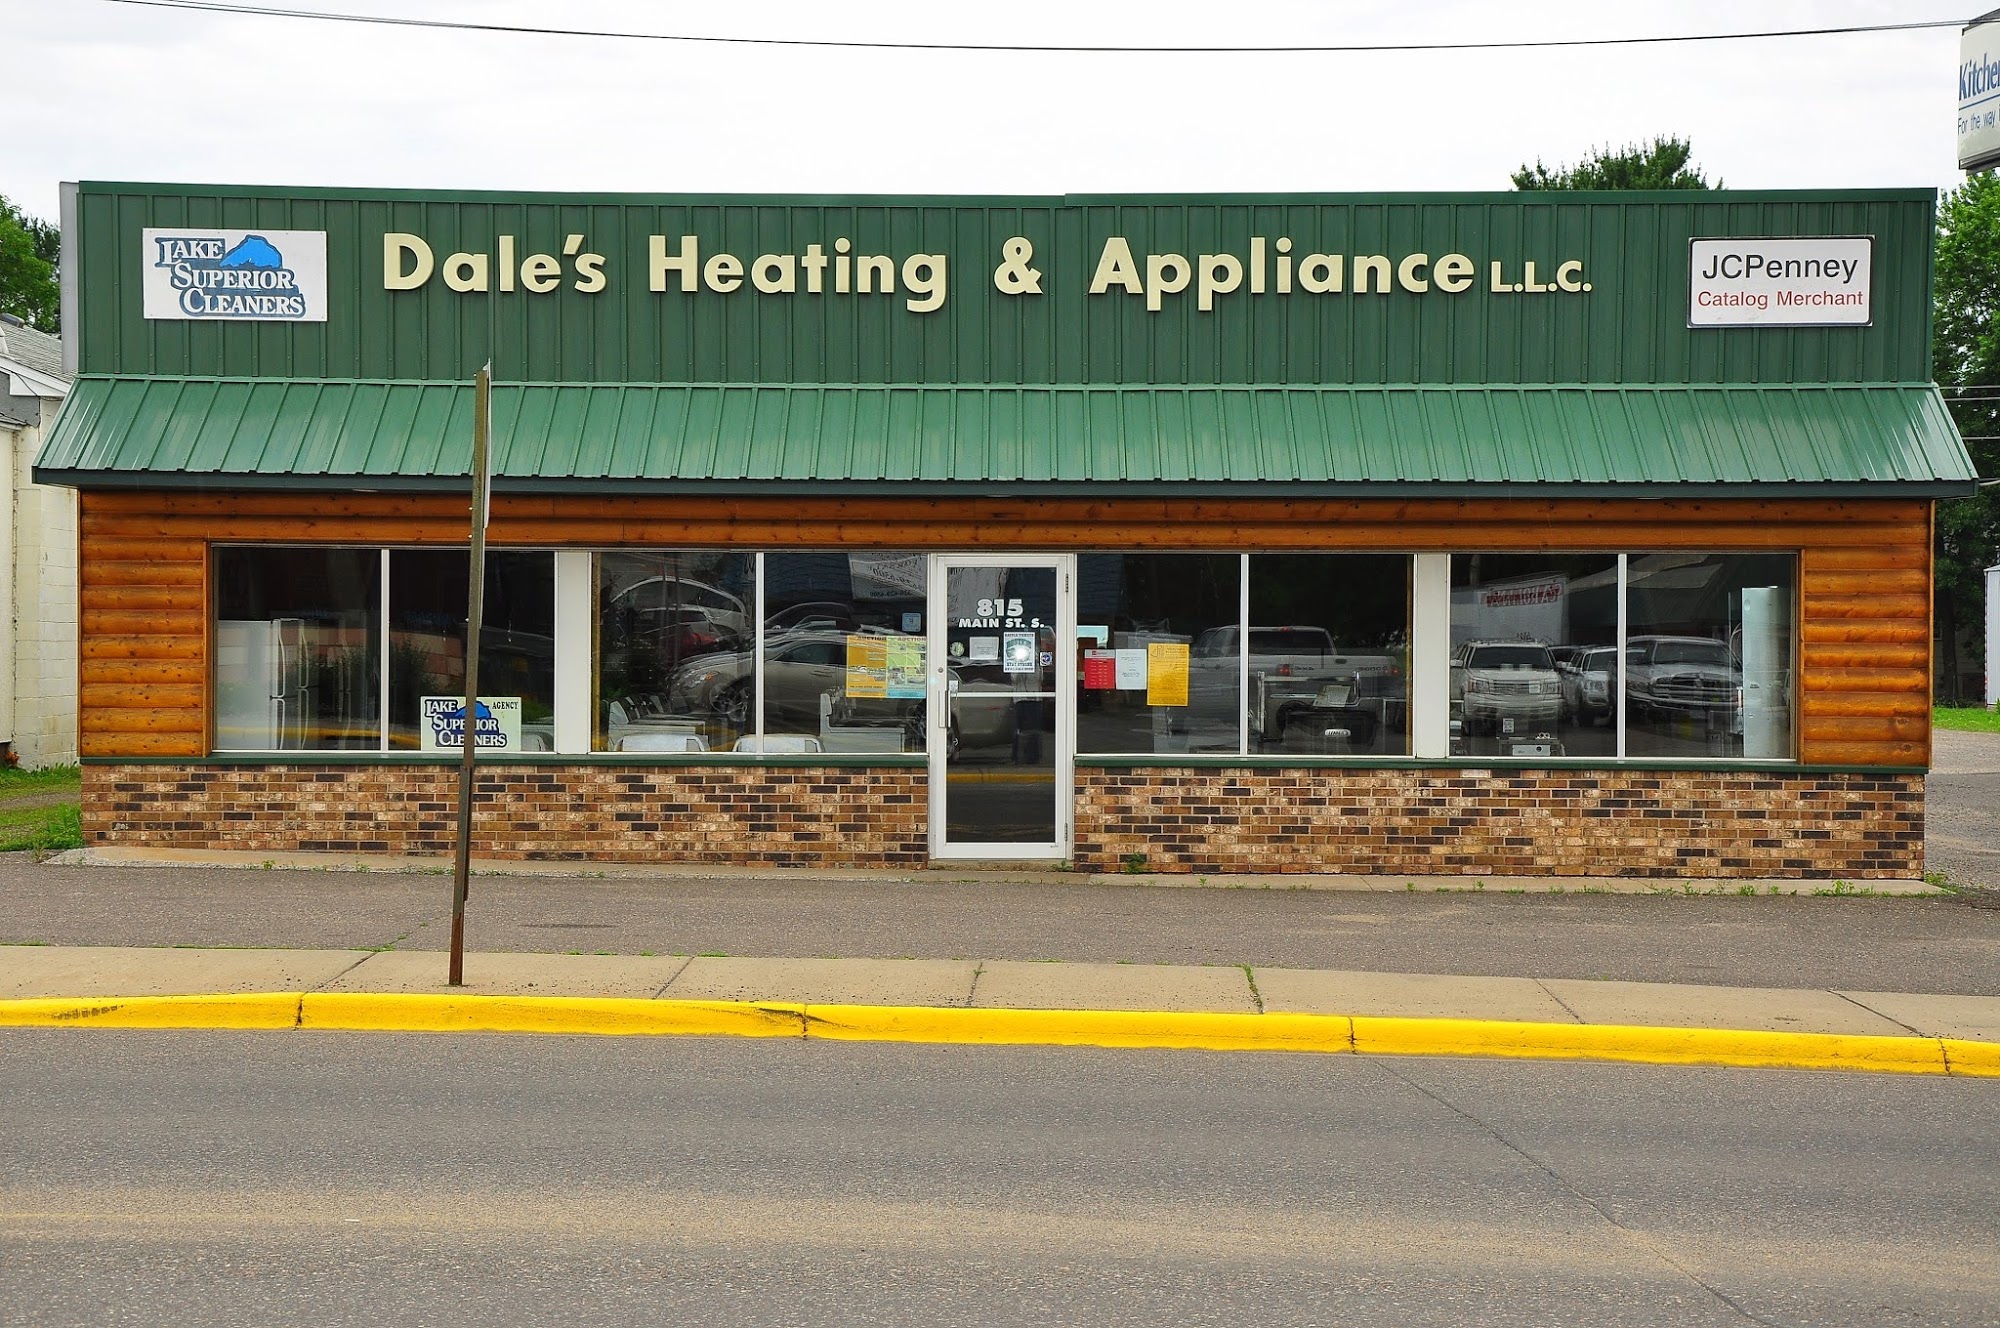 Dale's Heating & Appliance, LLC.